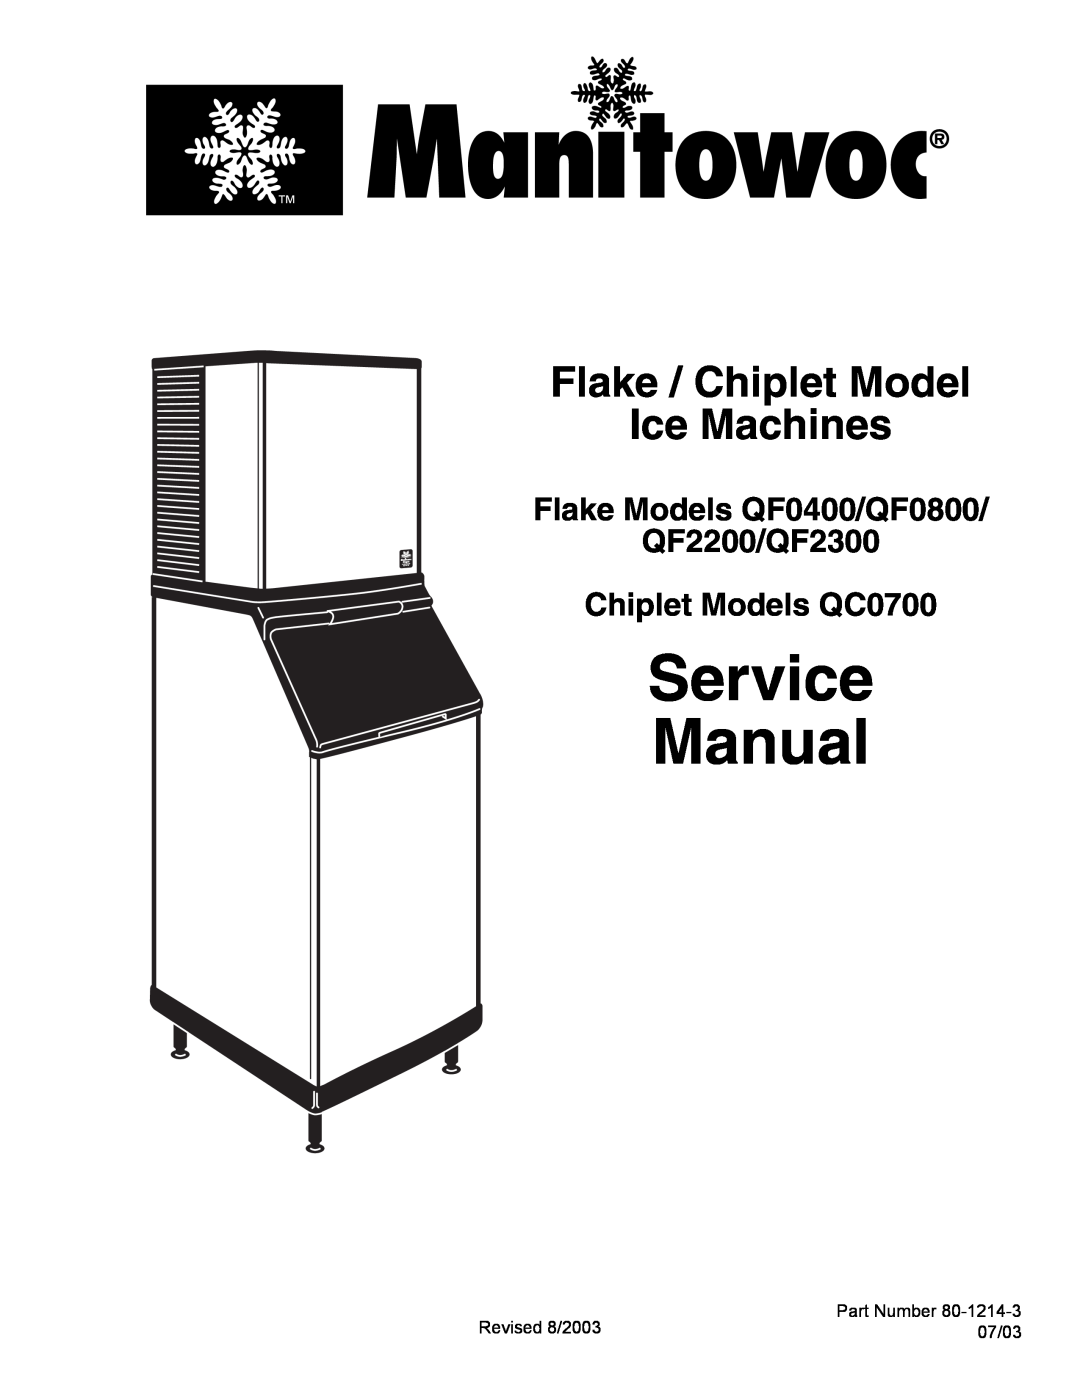 Manitowoc Ice service manual Flake Models QF0400/QF0800 QF2200/QF2300, Chiplet Models QC0700, Service Manual 